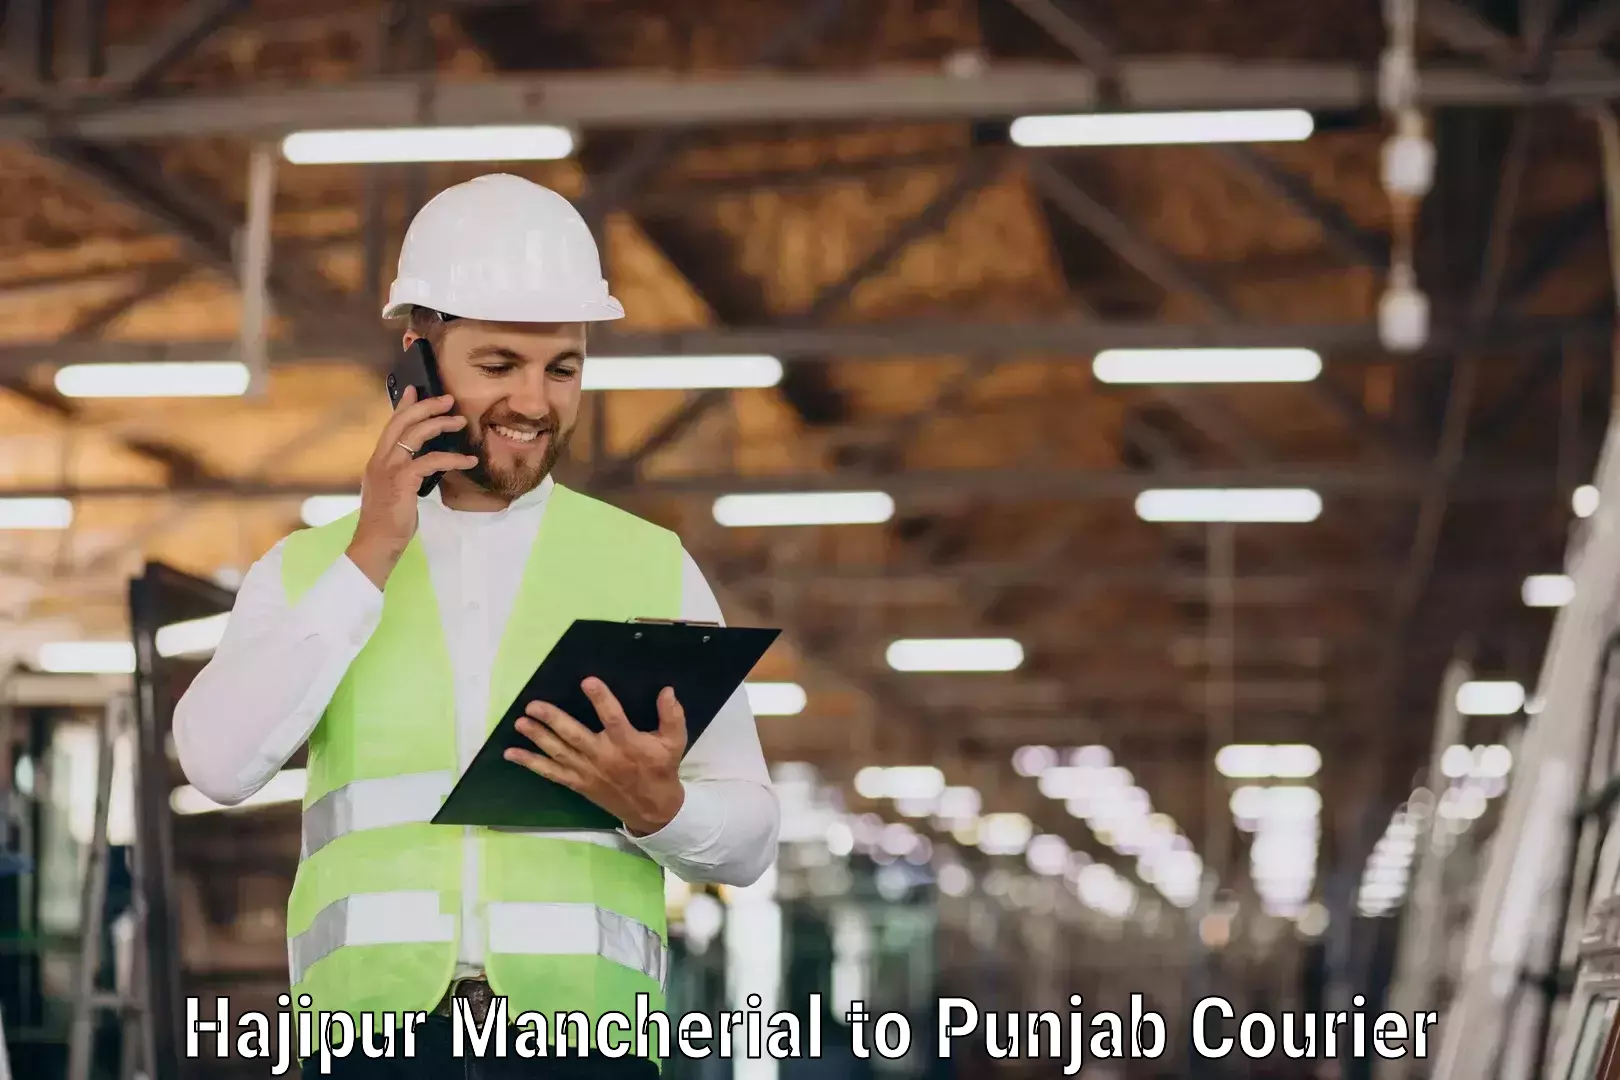 International courier networks Hajipur Mancherial to Punjab